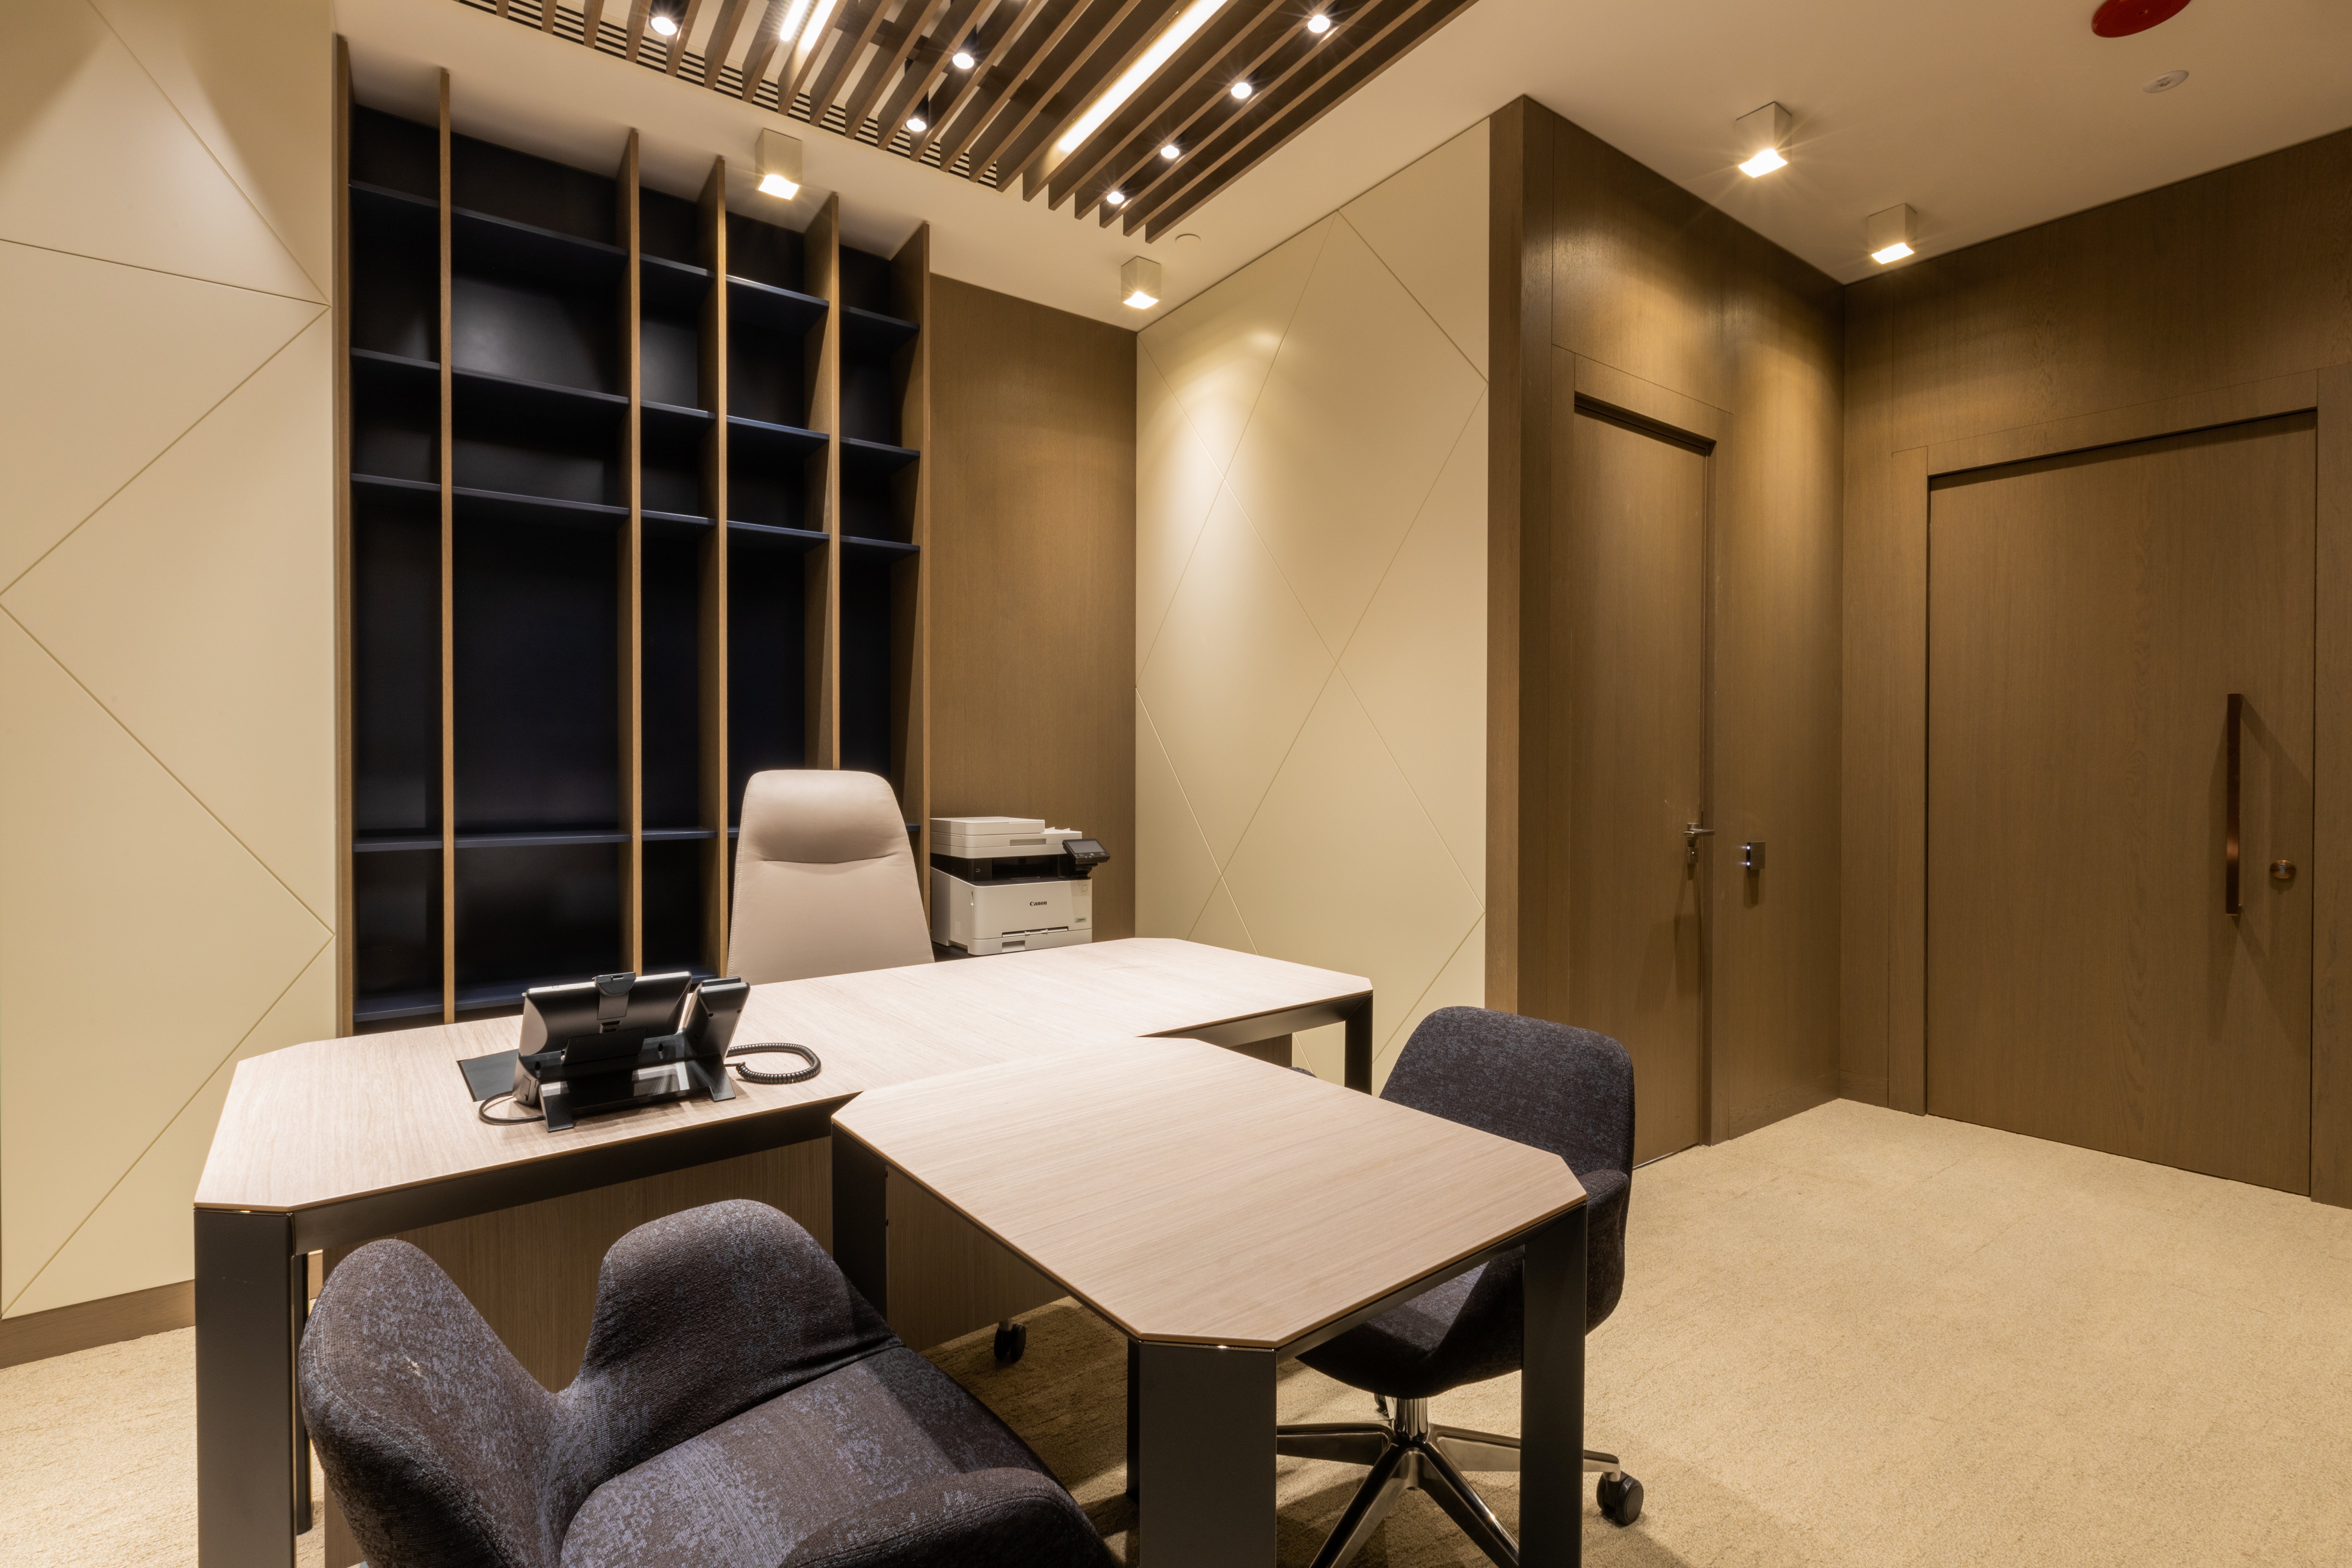 Shinnoki - office - acoustic panels - panels - wooden panels - office interior - veneer - wood panels